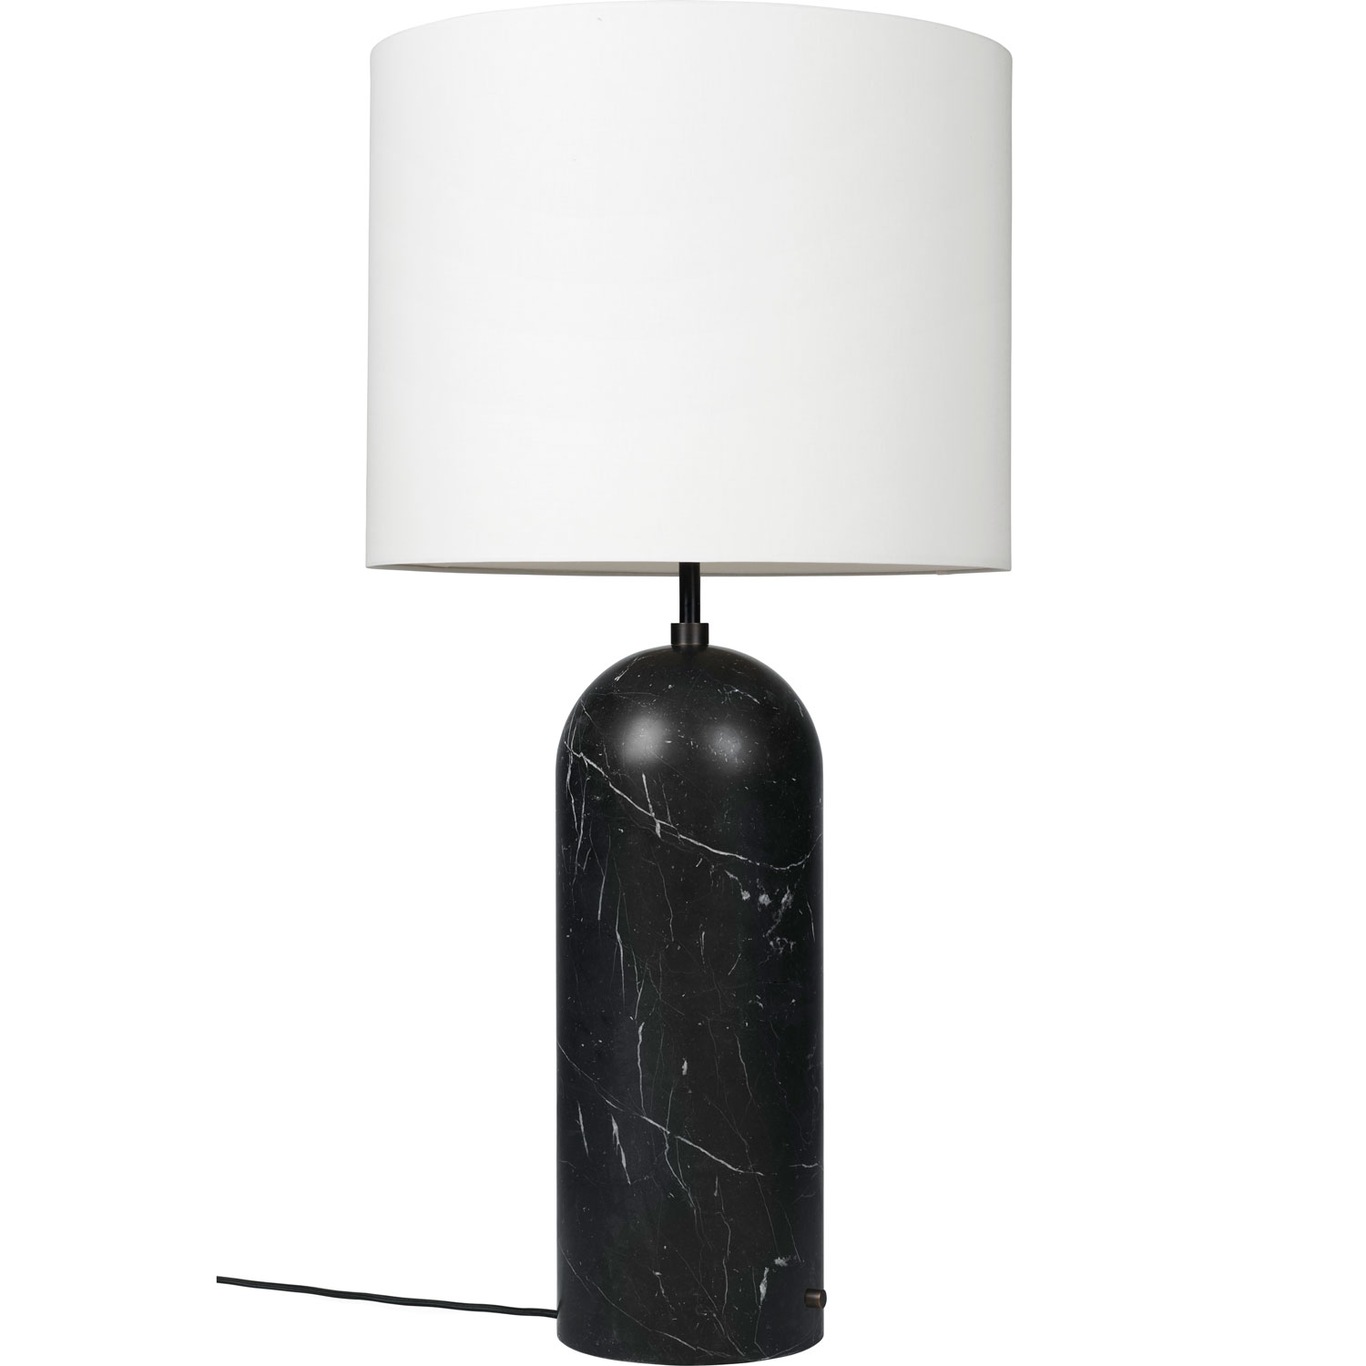 Gravity XL Stehlampe Niedrig, In Schwarzem Marmor / Weiß